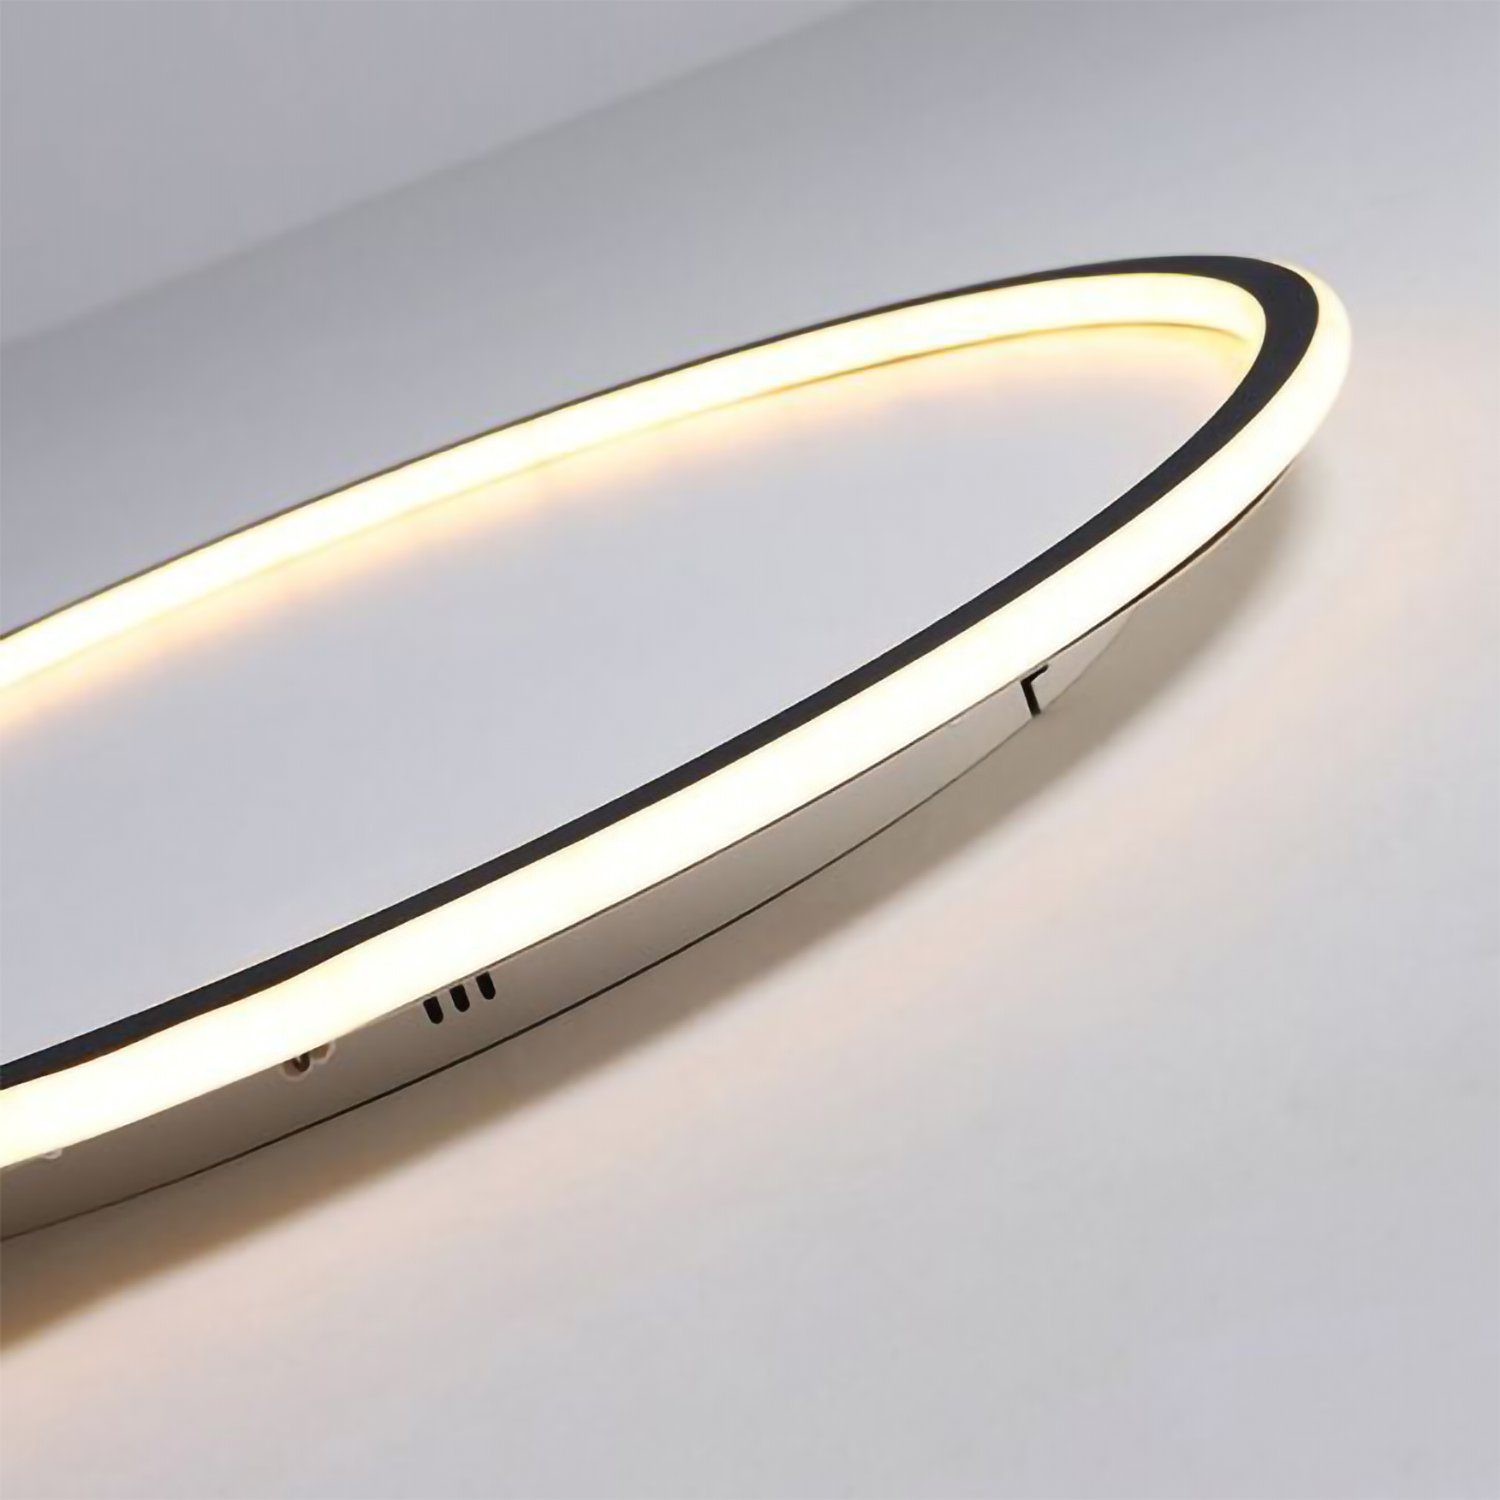 Ailiebe Design LED Memory mit ultraflach, LED fest integriert, Deckenleuchte, Fernbedienung, Dimmbar, mit Deckenlampe Dimmbar Funktion